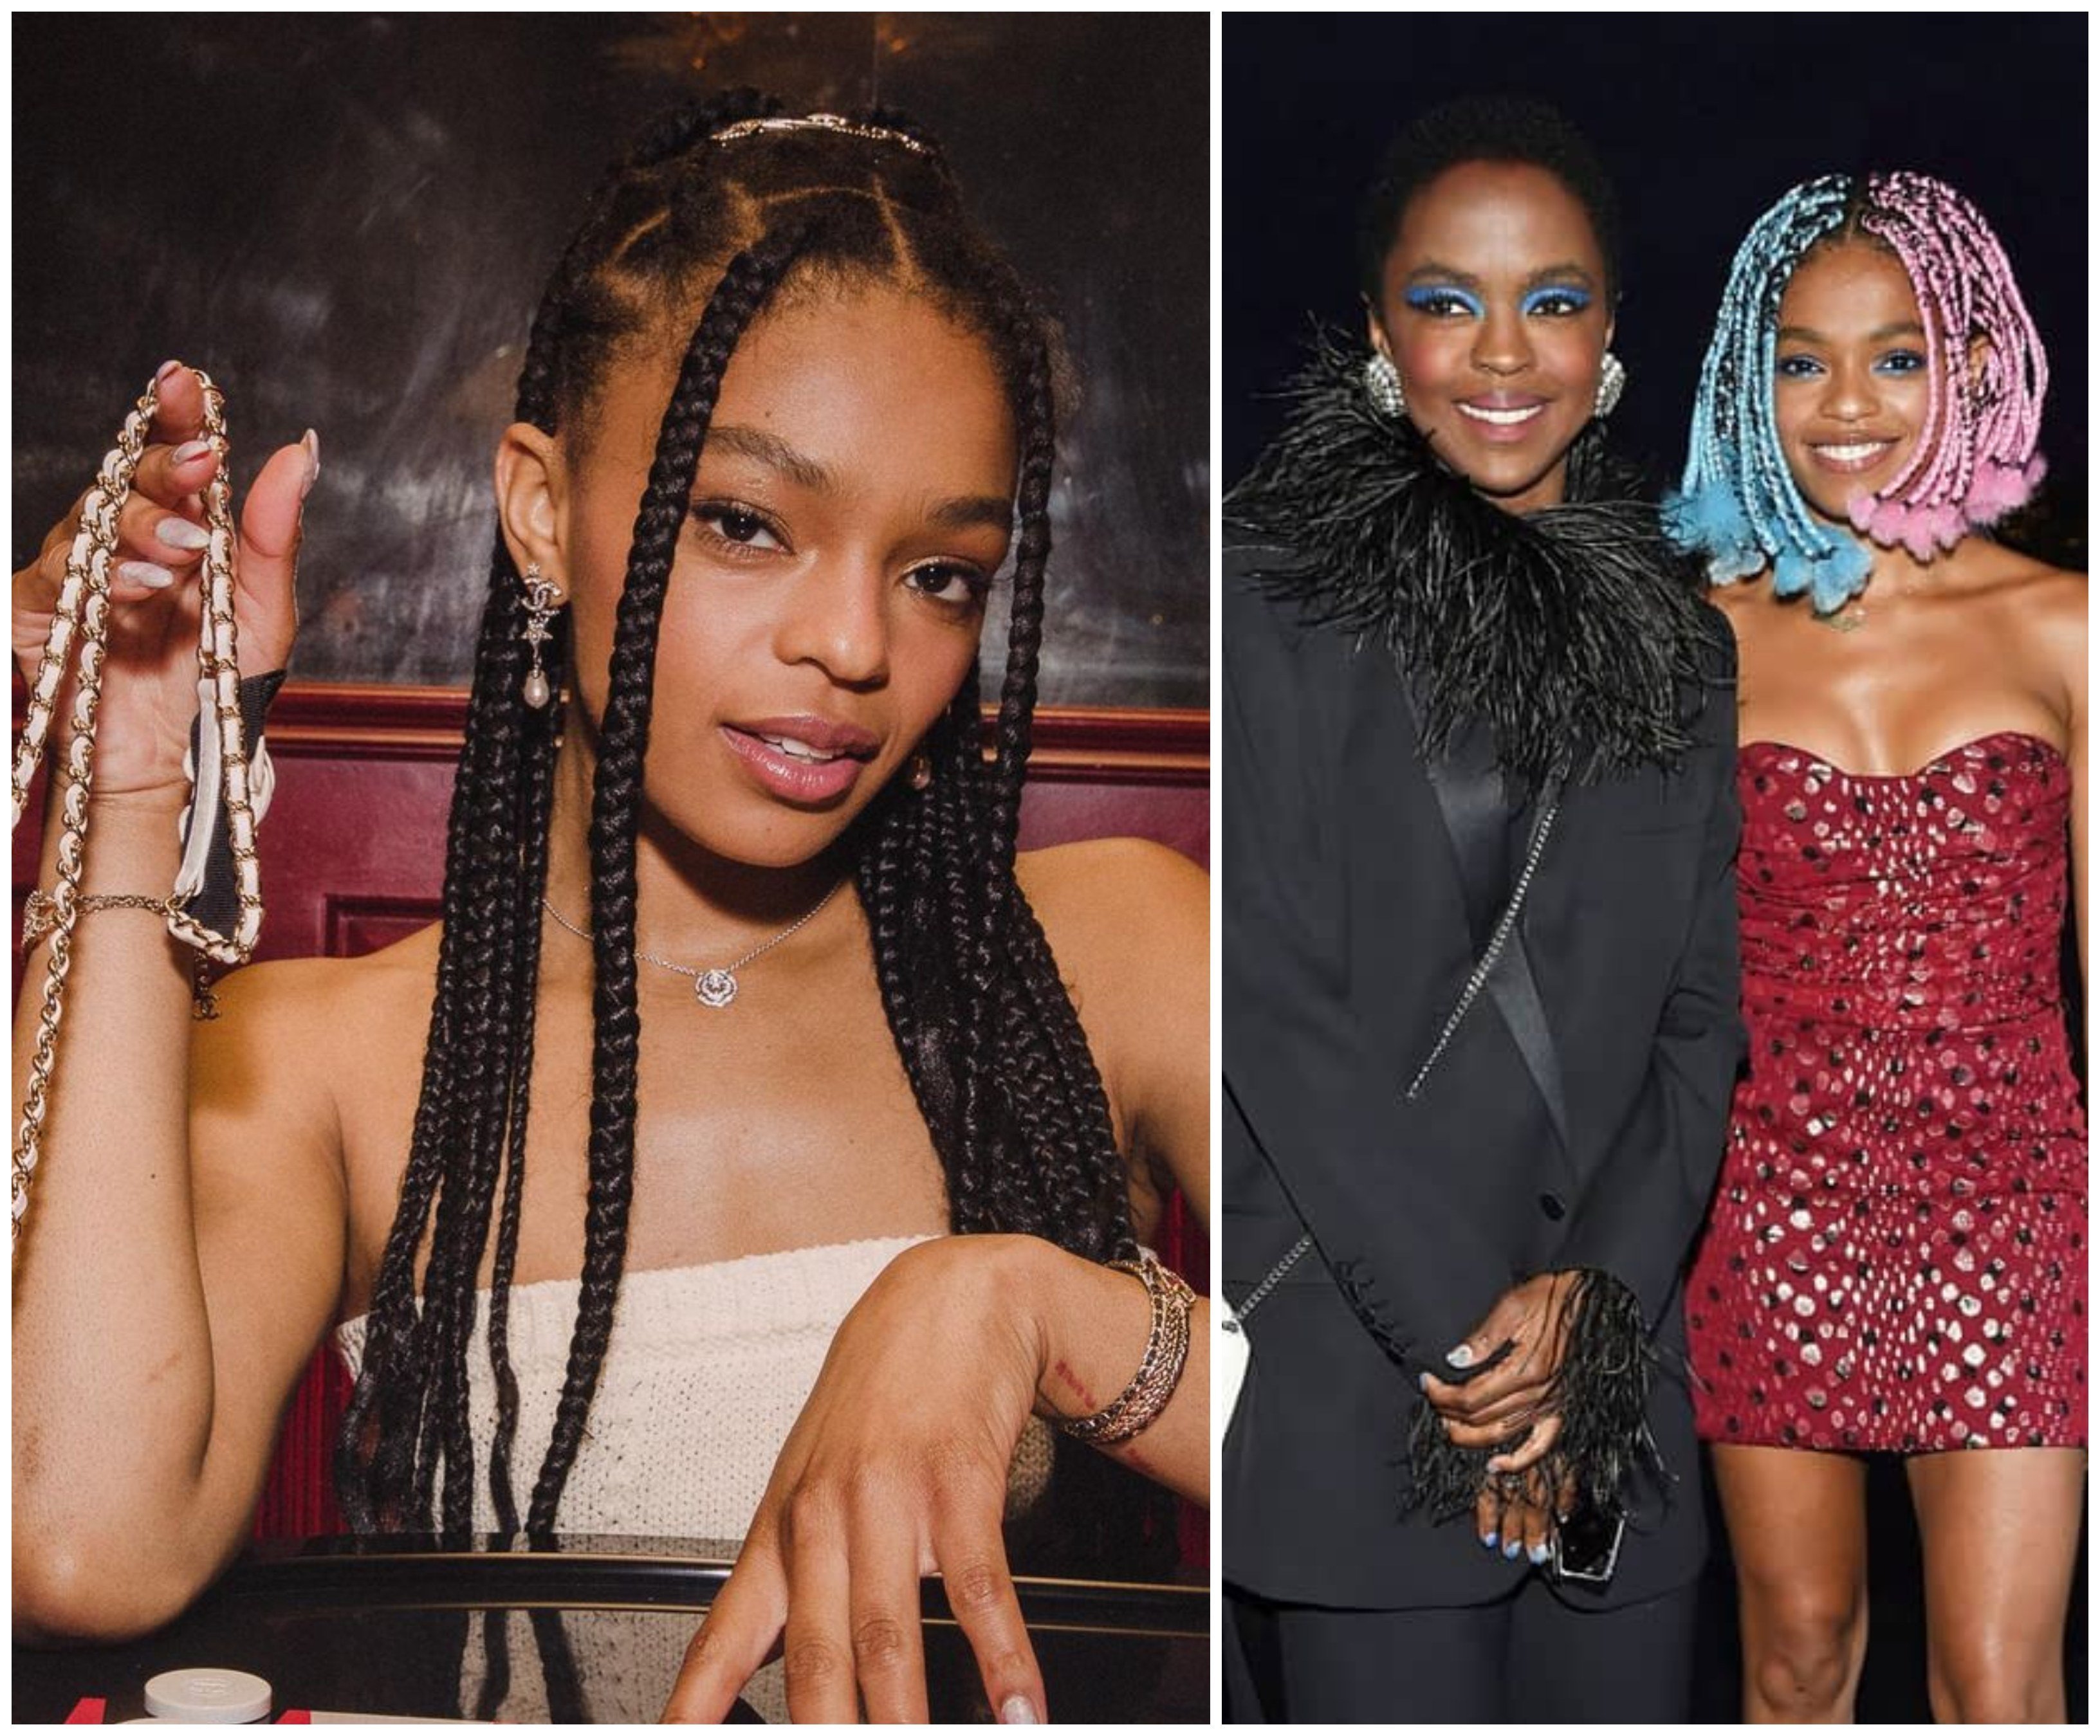 Bob Marley’s controversial granddaughter, Selah Marley, is the daughter of Lauryn Hill. Photos: @selah/Instagram